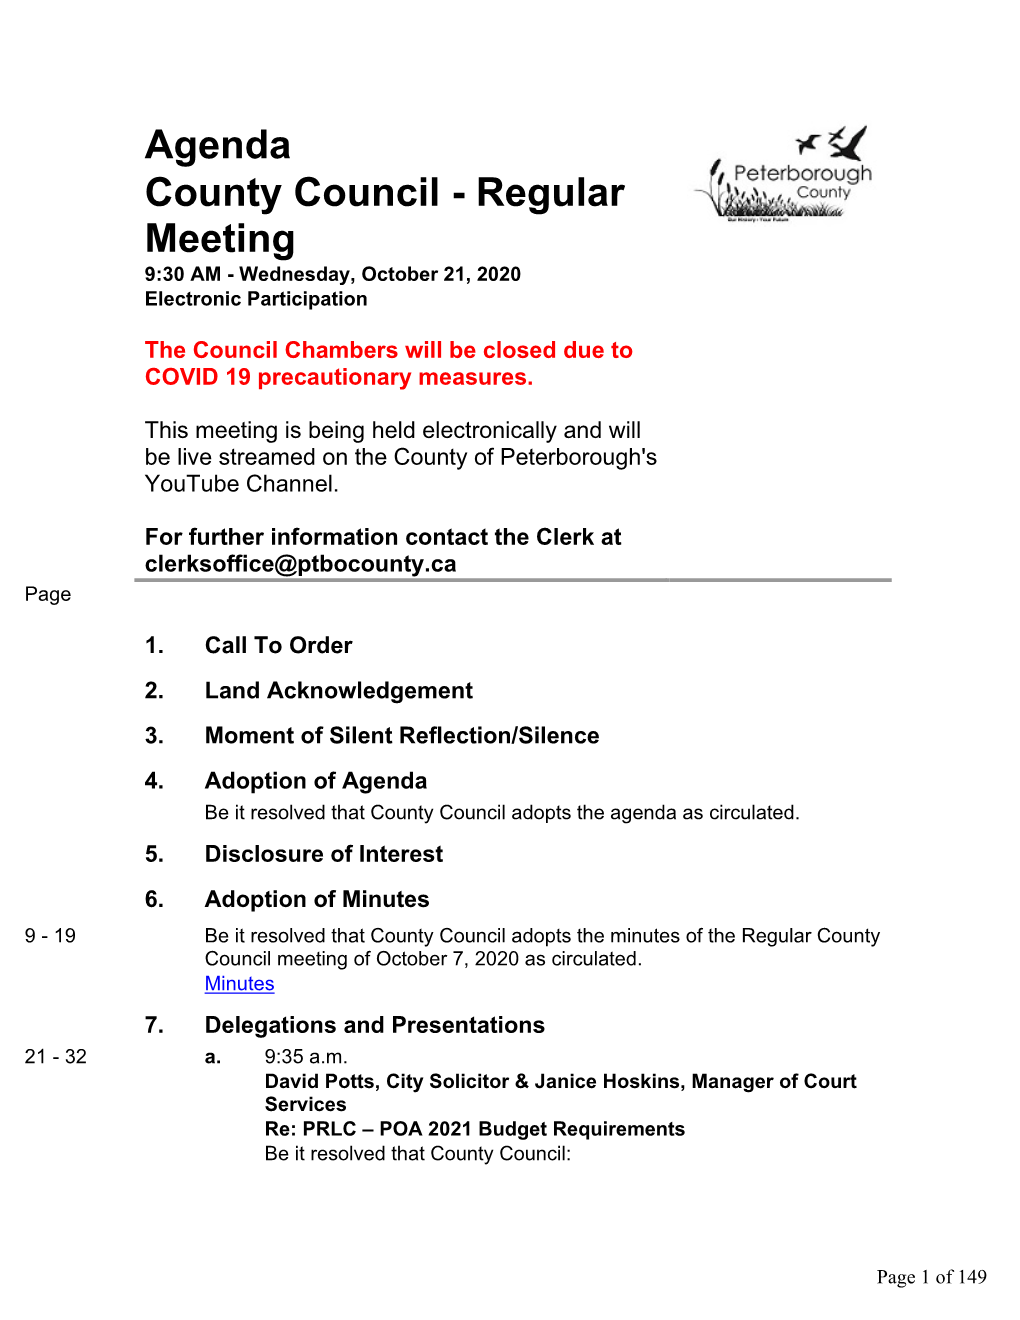 County Council - Regular